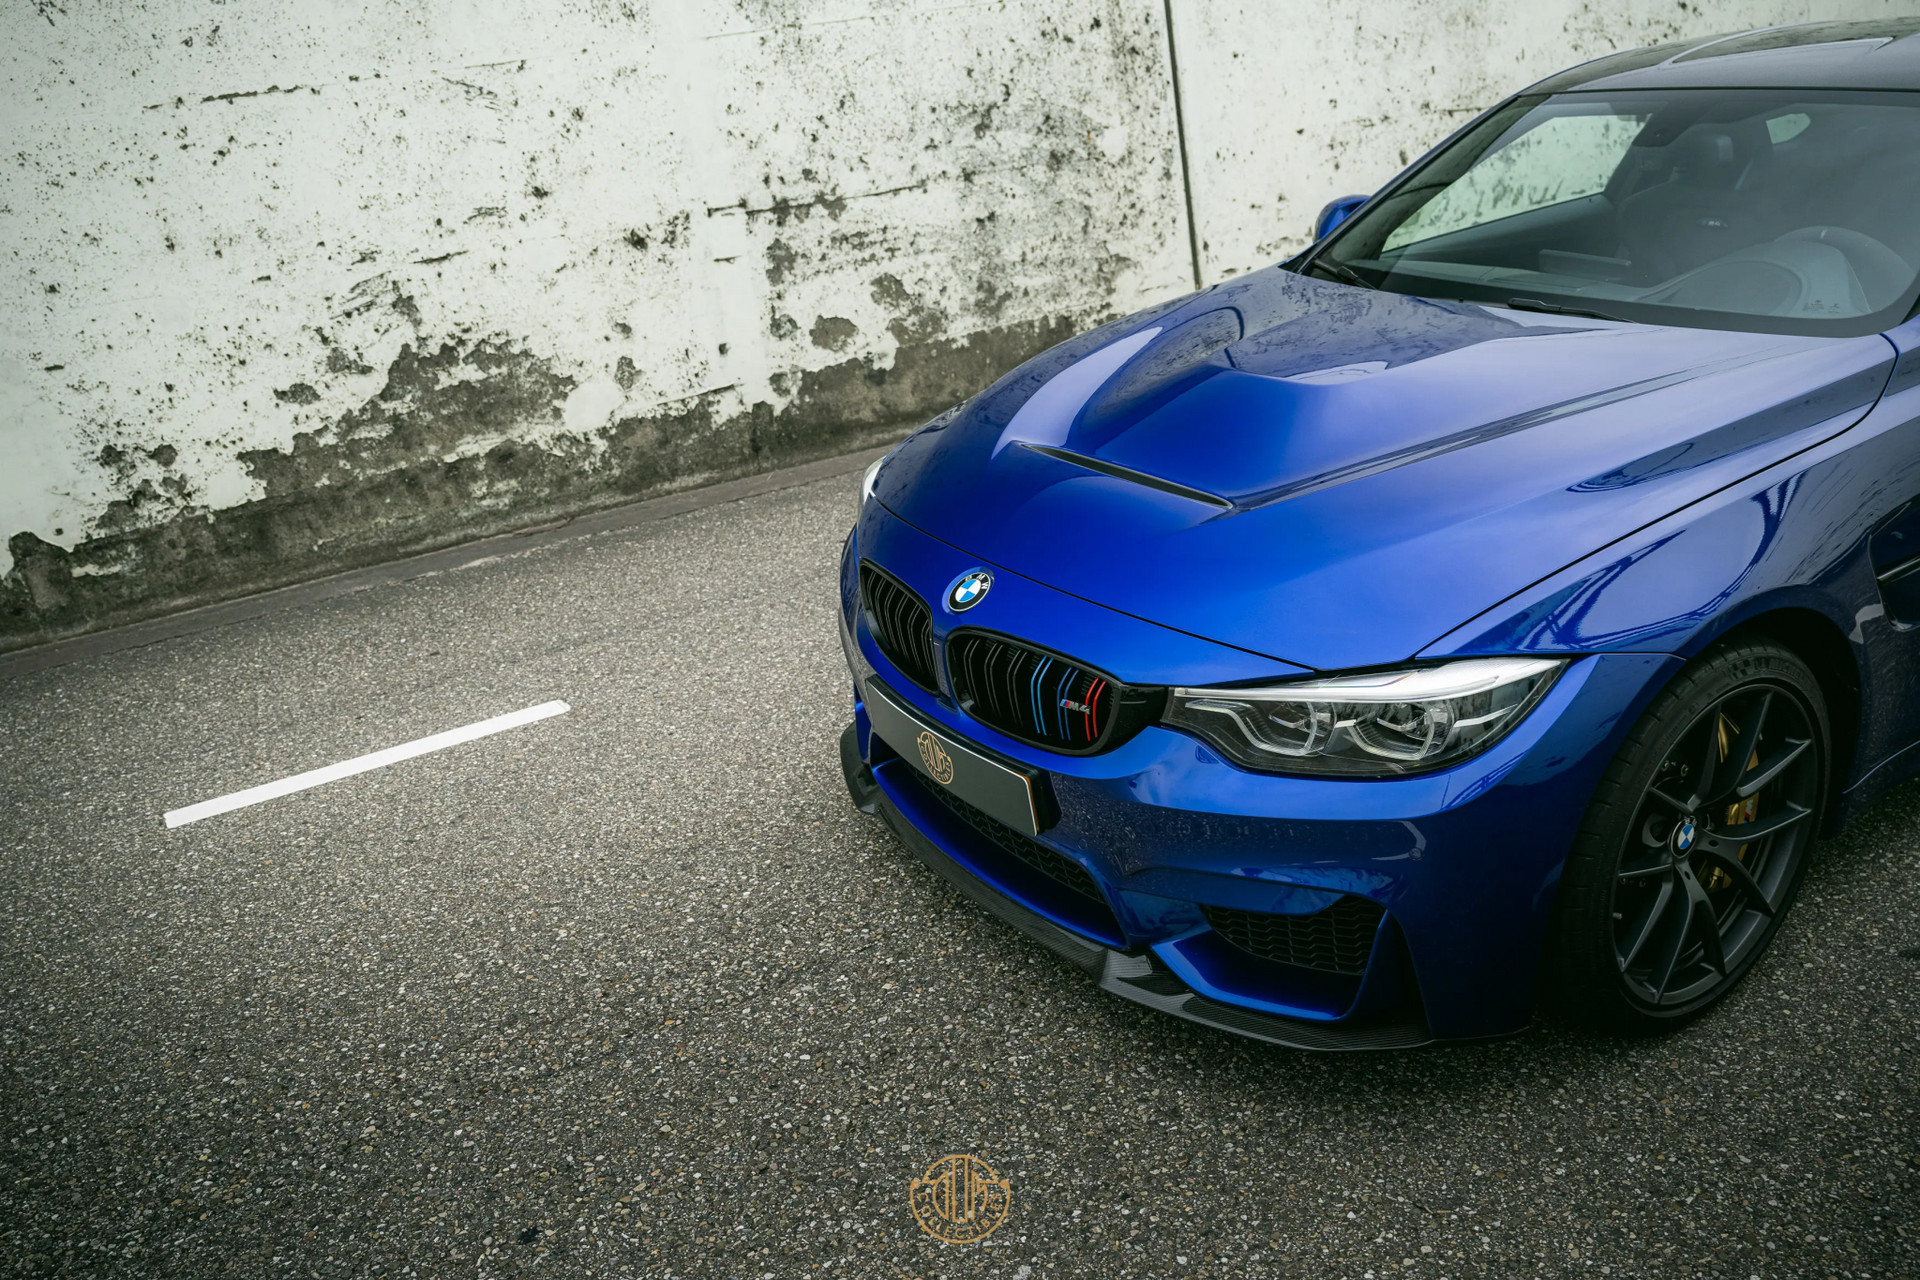 BMW 4 Serie Coupé M4 CS 2017 San marino blau metallic 17